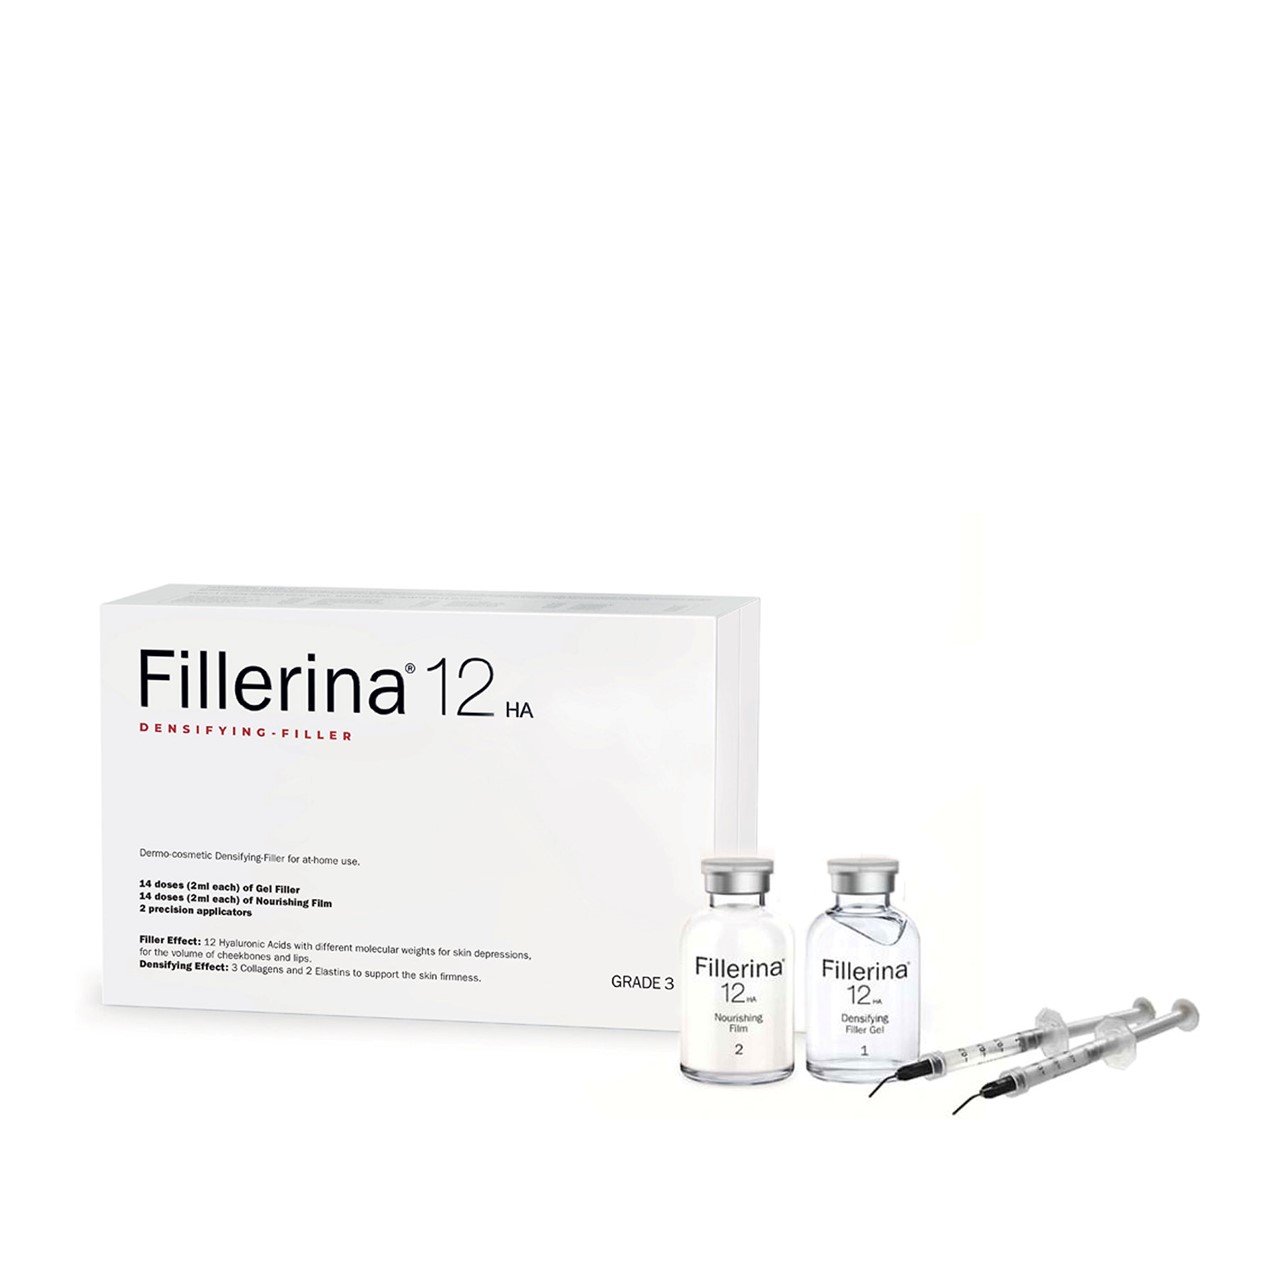 Fillerina 12HA Densifying-Filler Treatment Grade 3 30ml x2 (2x1.01fl oz)